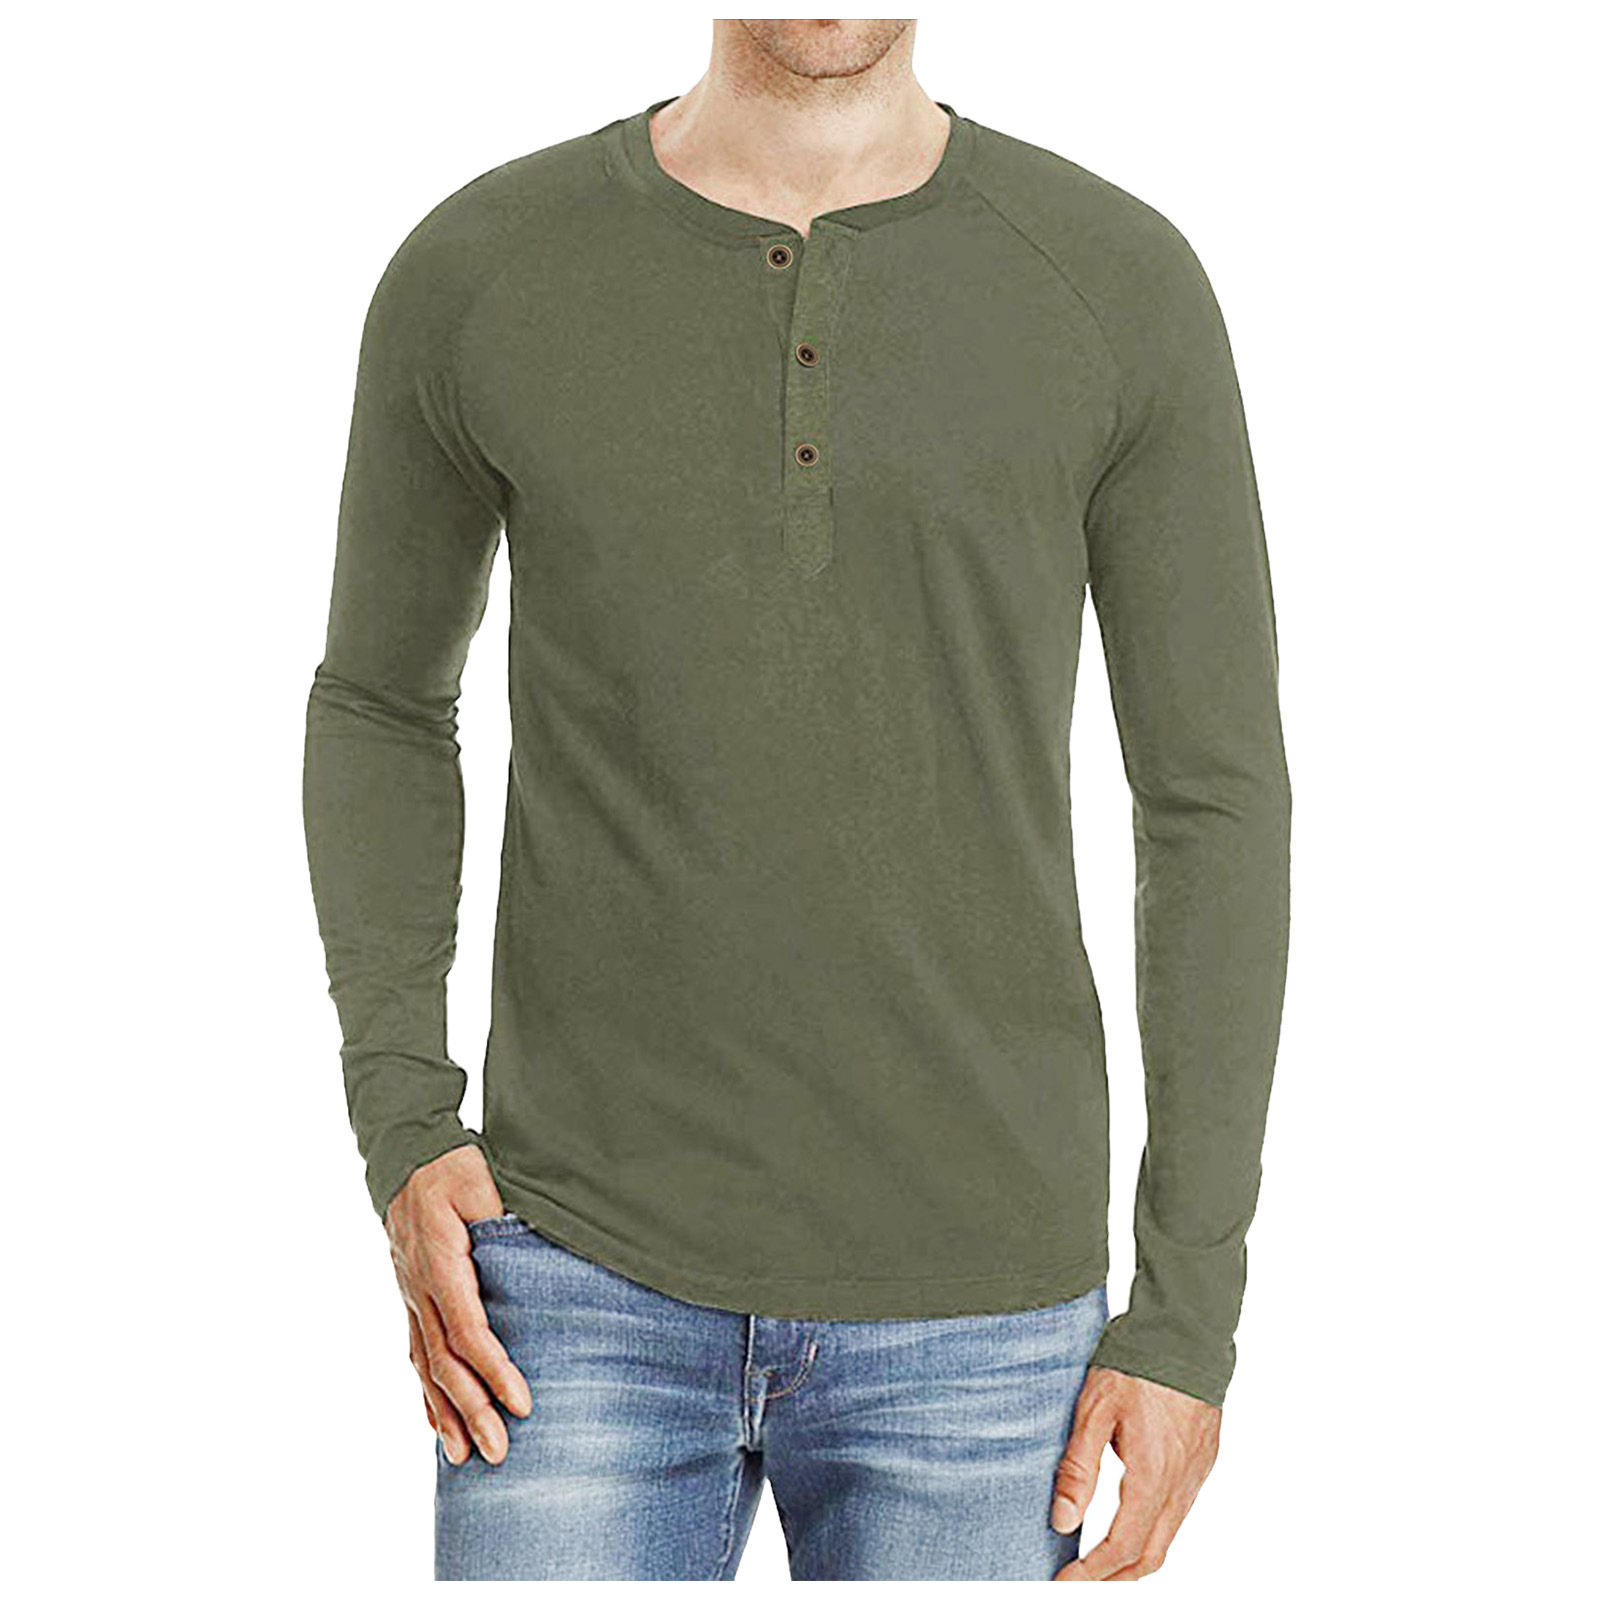 Men's Raglan Sleeve Henley Chic Solid T-shirt